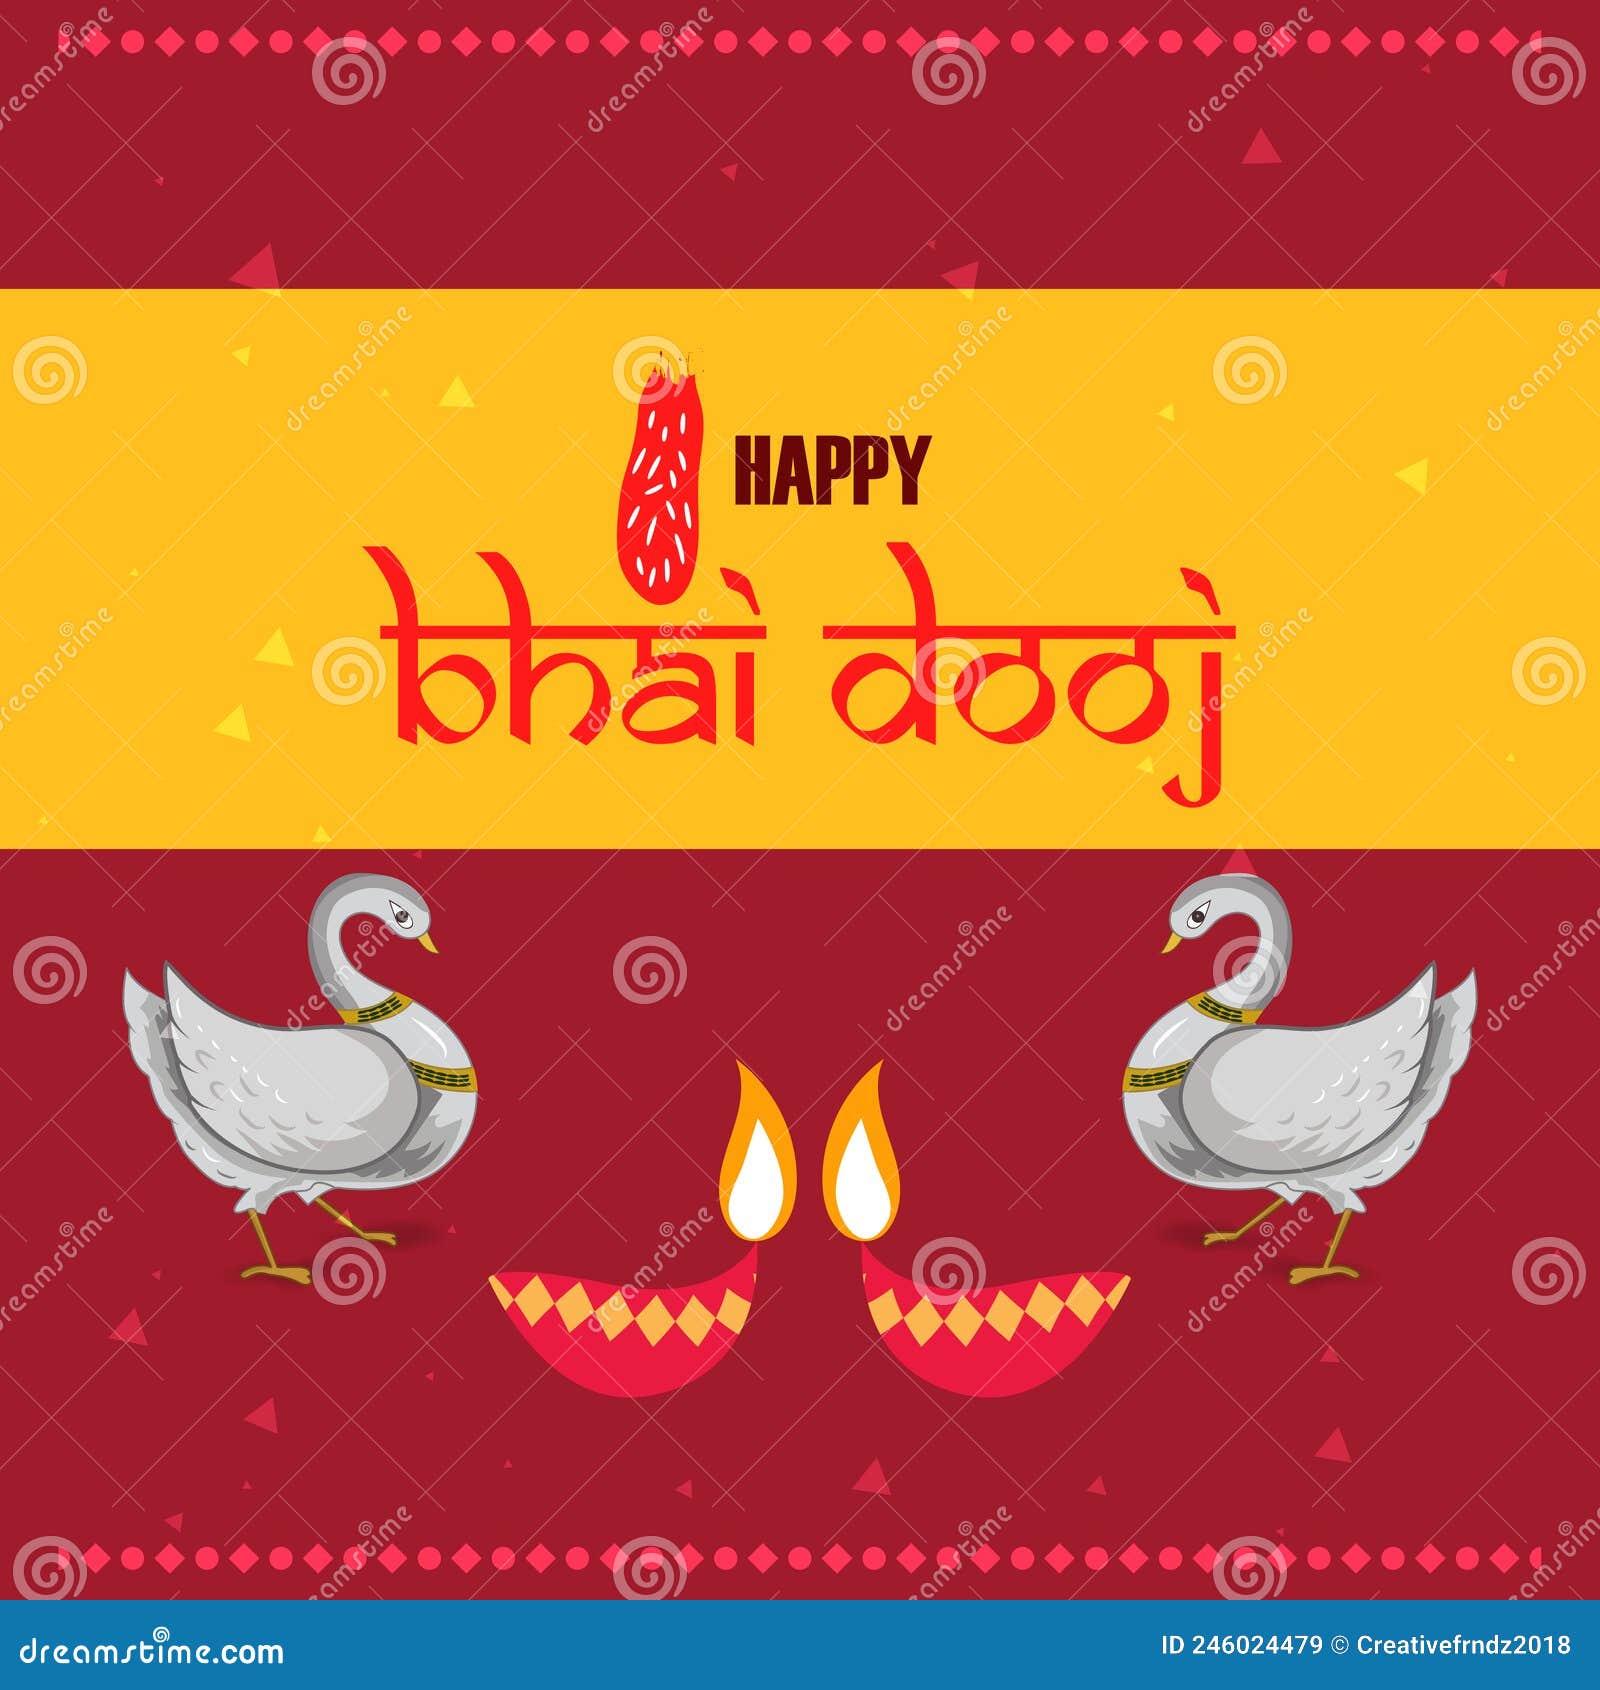 Happy bhai dooj wishes greeting card design Vector Image